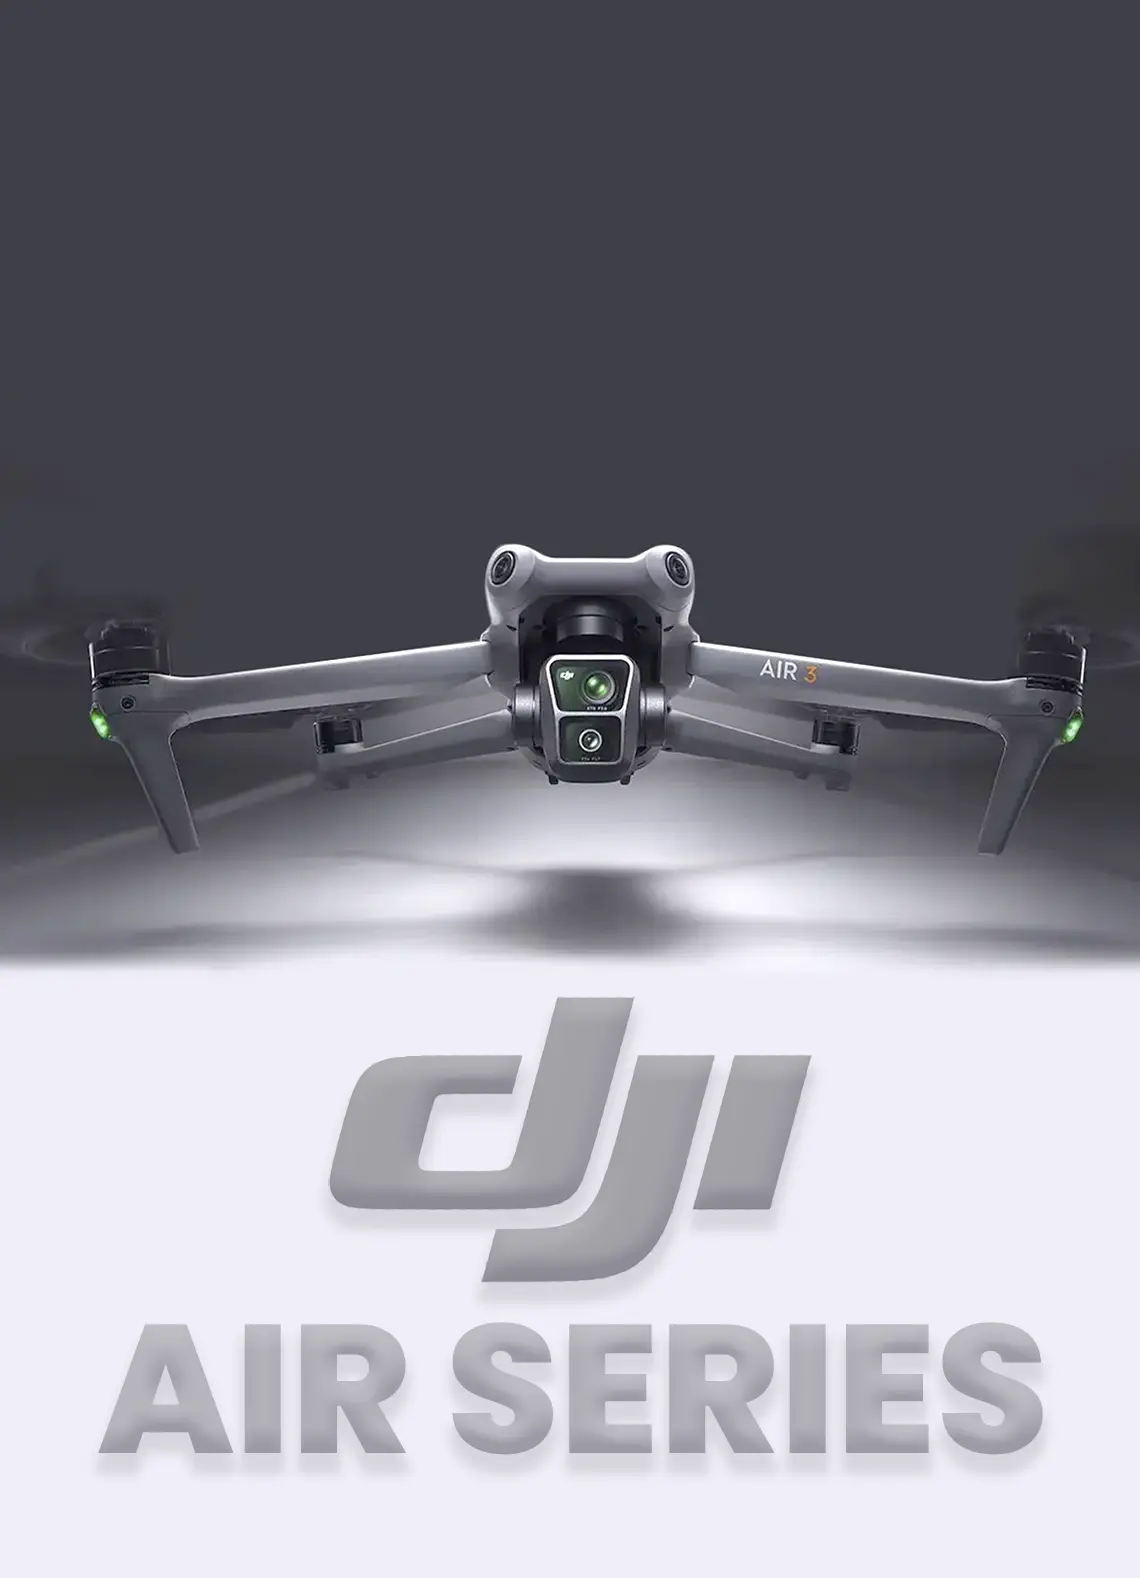 AIR SERIES DJI DRONE